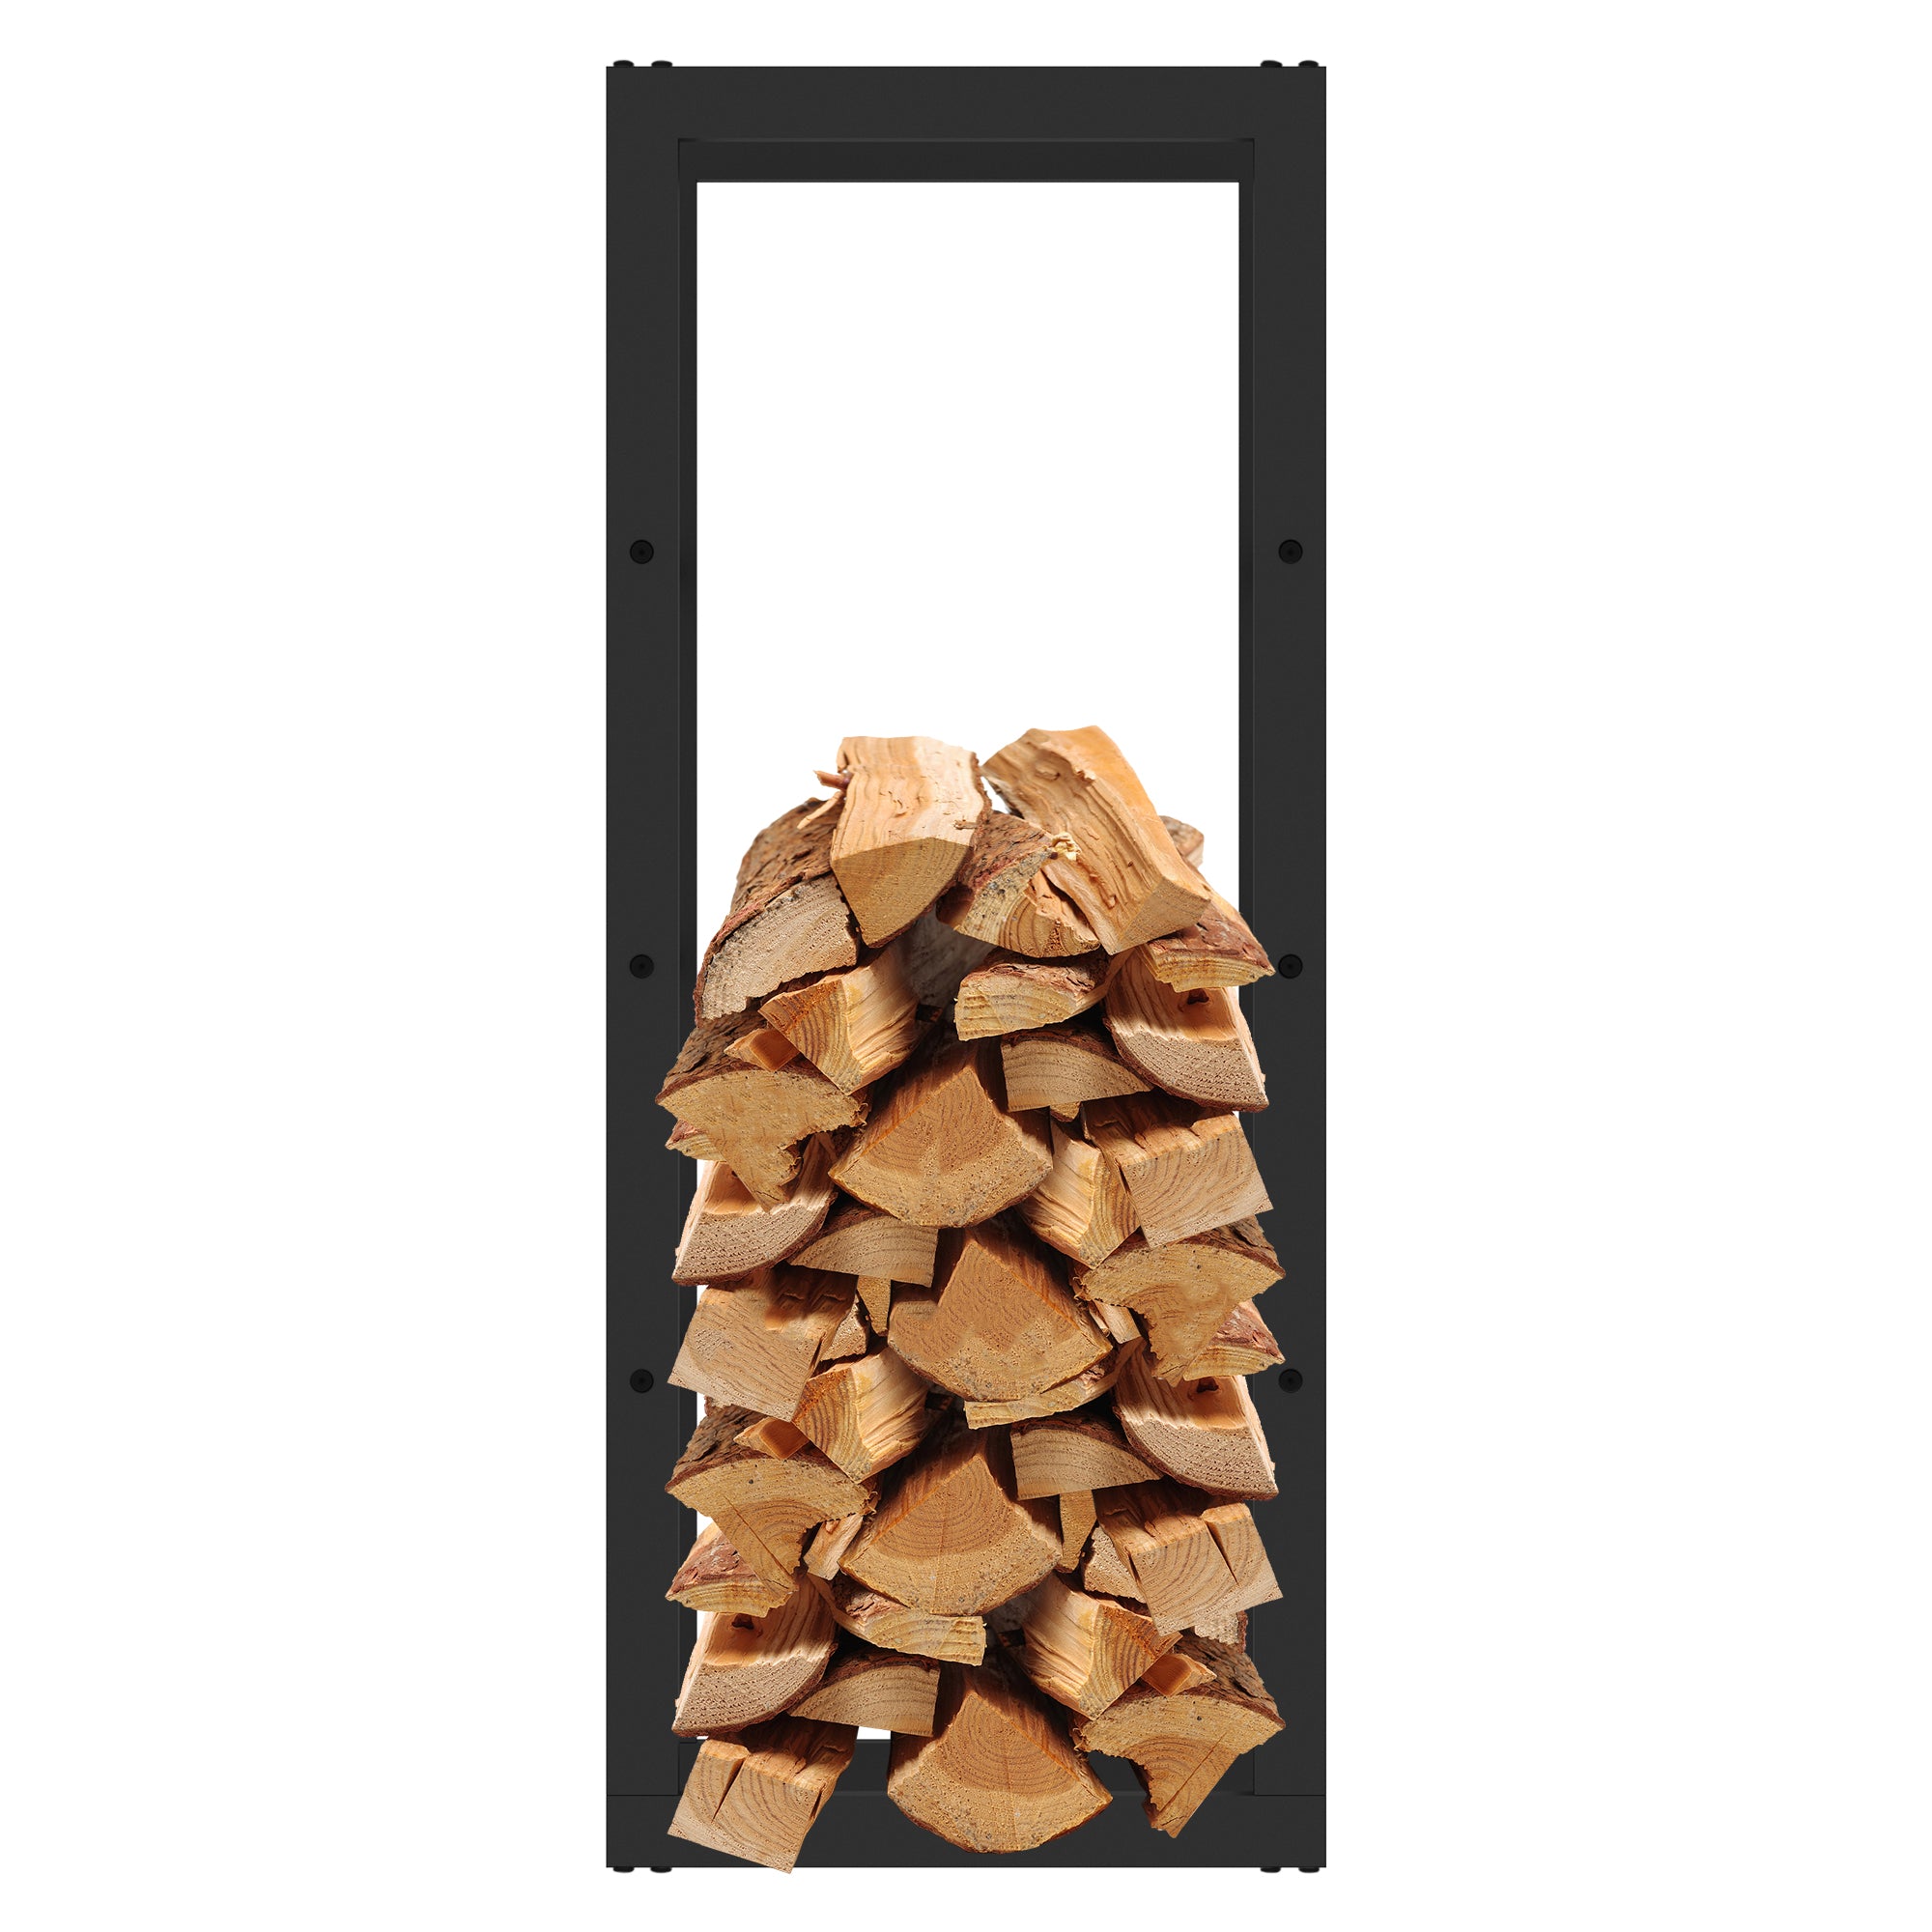 AMOS Tall Metal Firewood Log Holder